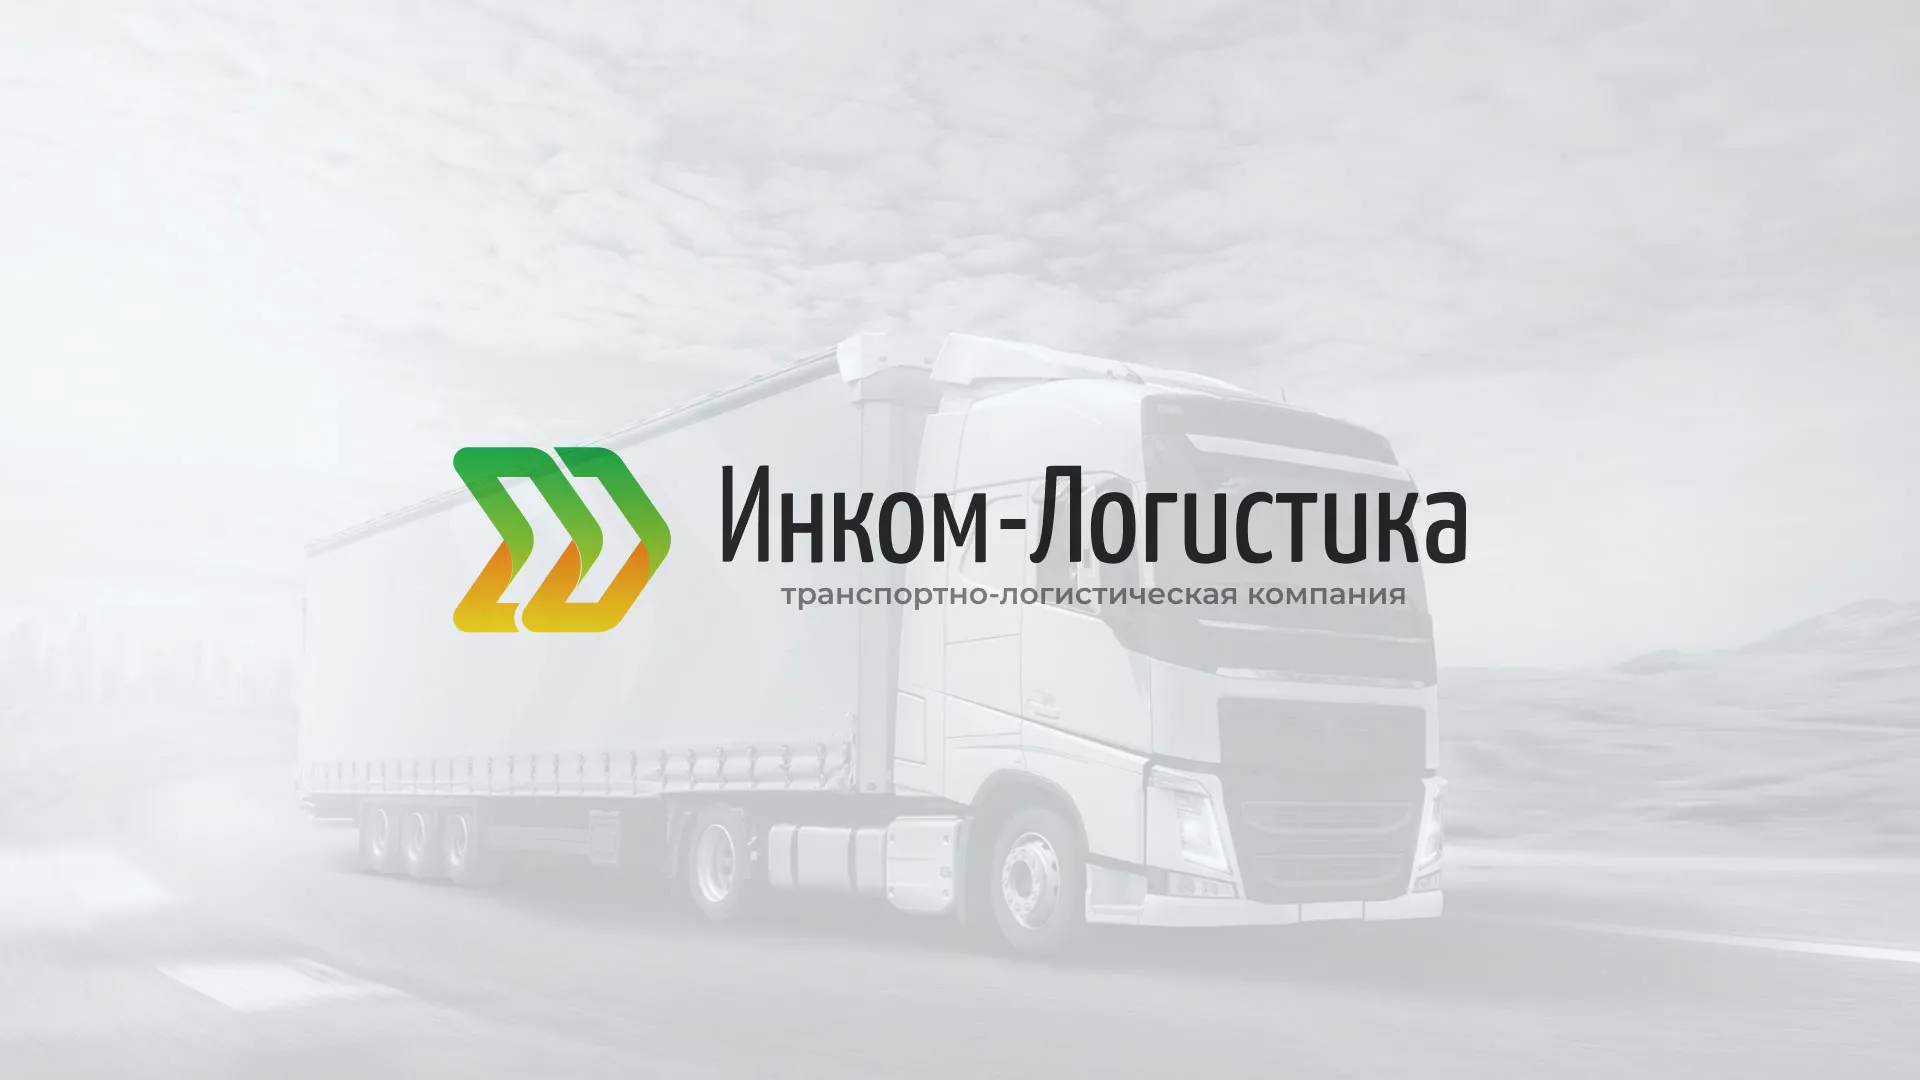 Разработка логотипа и сайта компании «Инком-Логистика» в Якутске